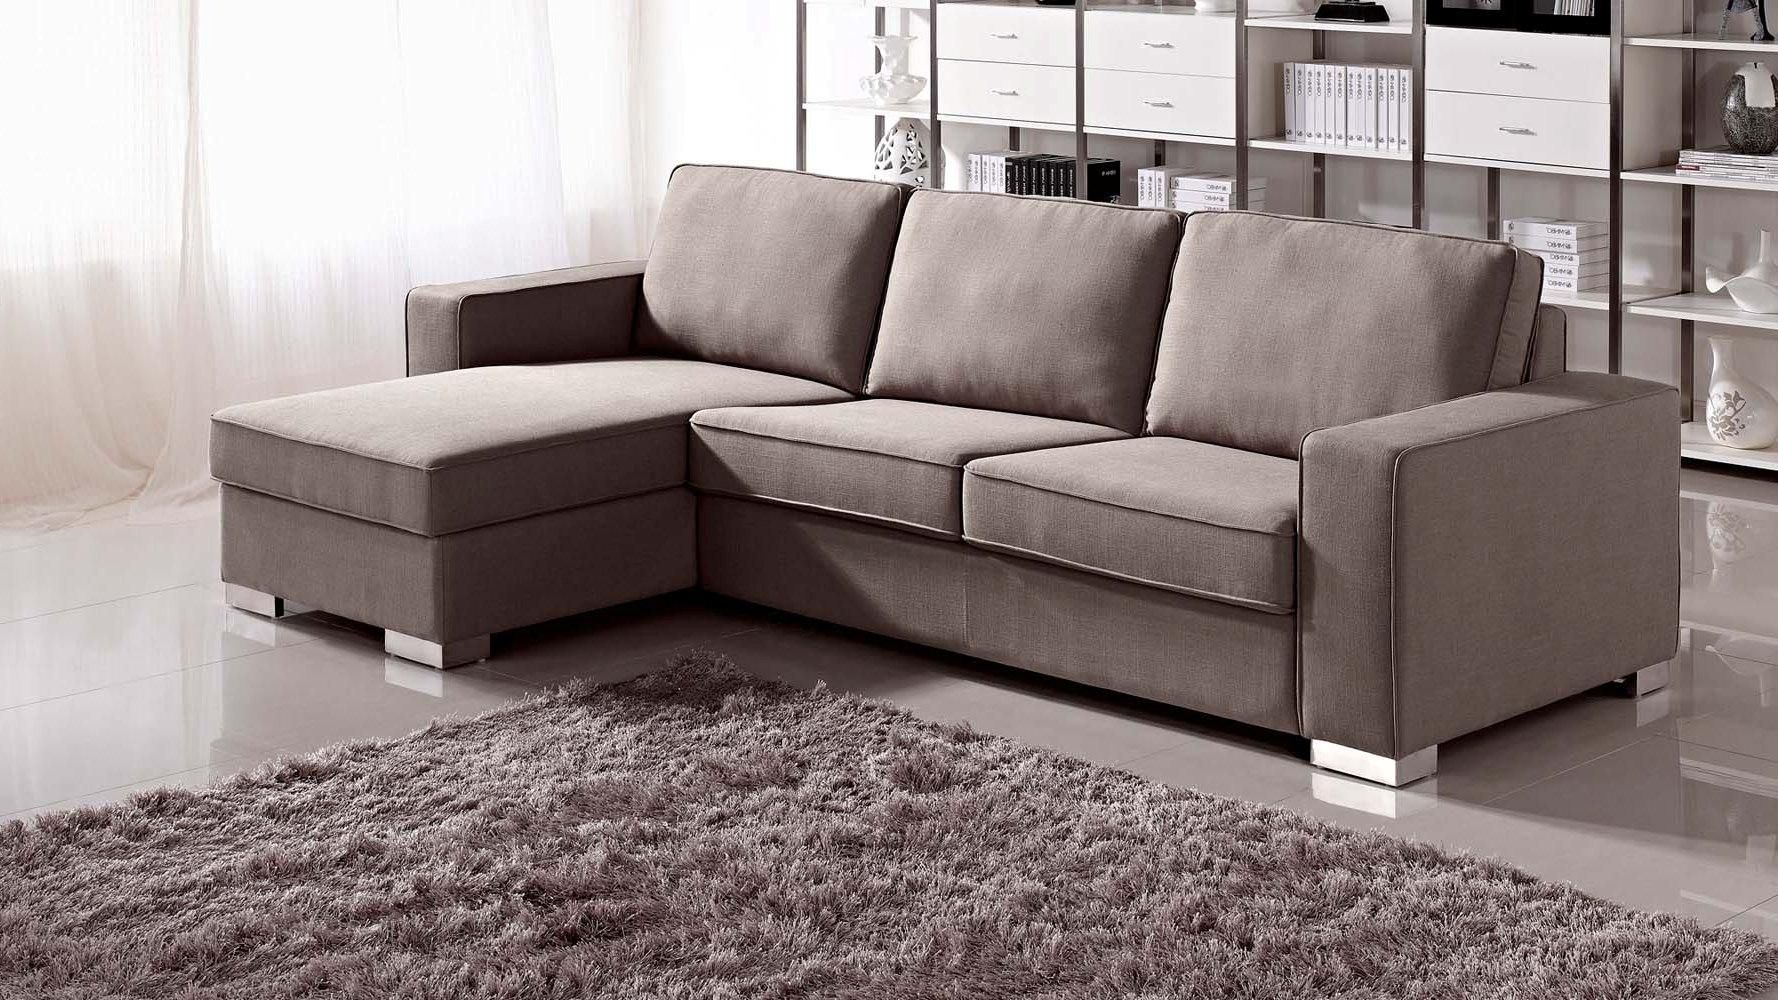 Sofas Center : Broyhill Furniture Milo Contemporary Sectional Sofa Within Broyhill Sectional Sofa (View 9 of 15)